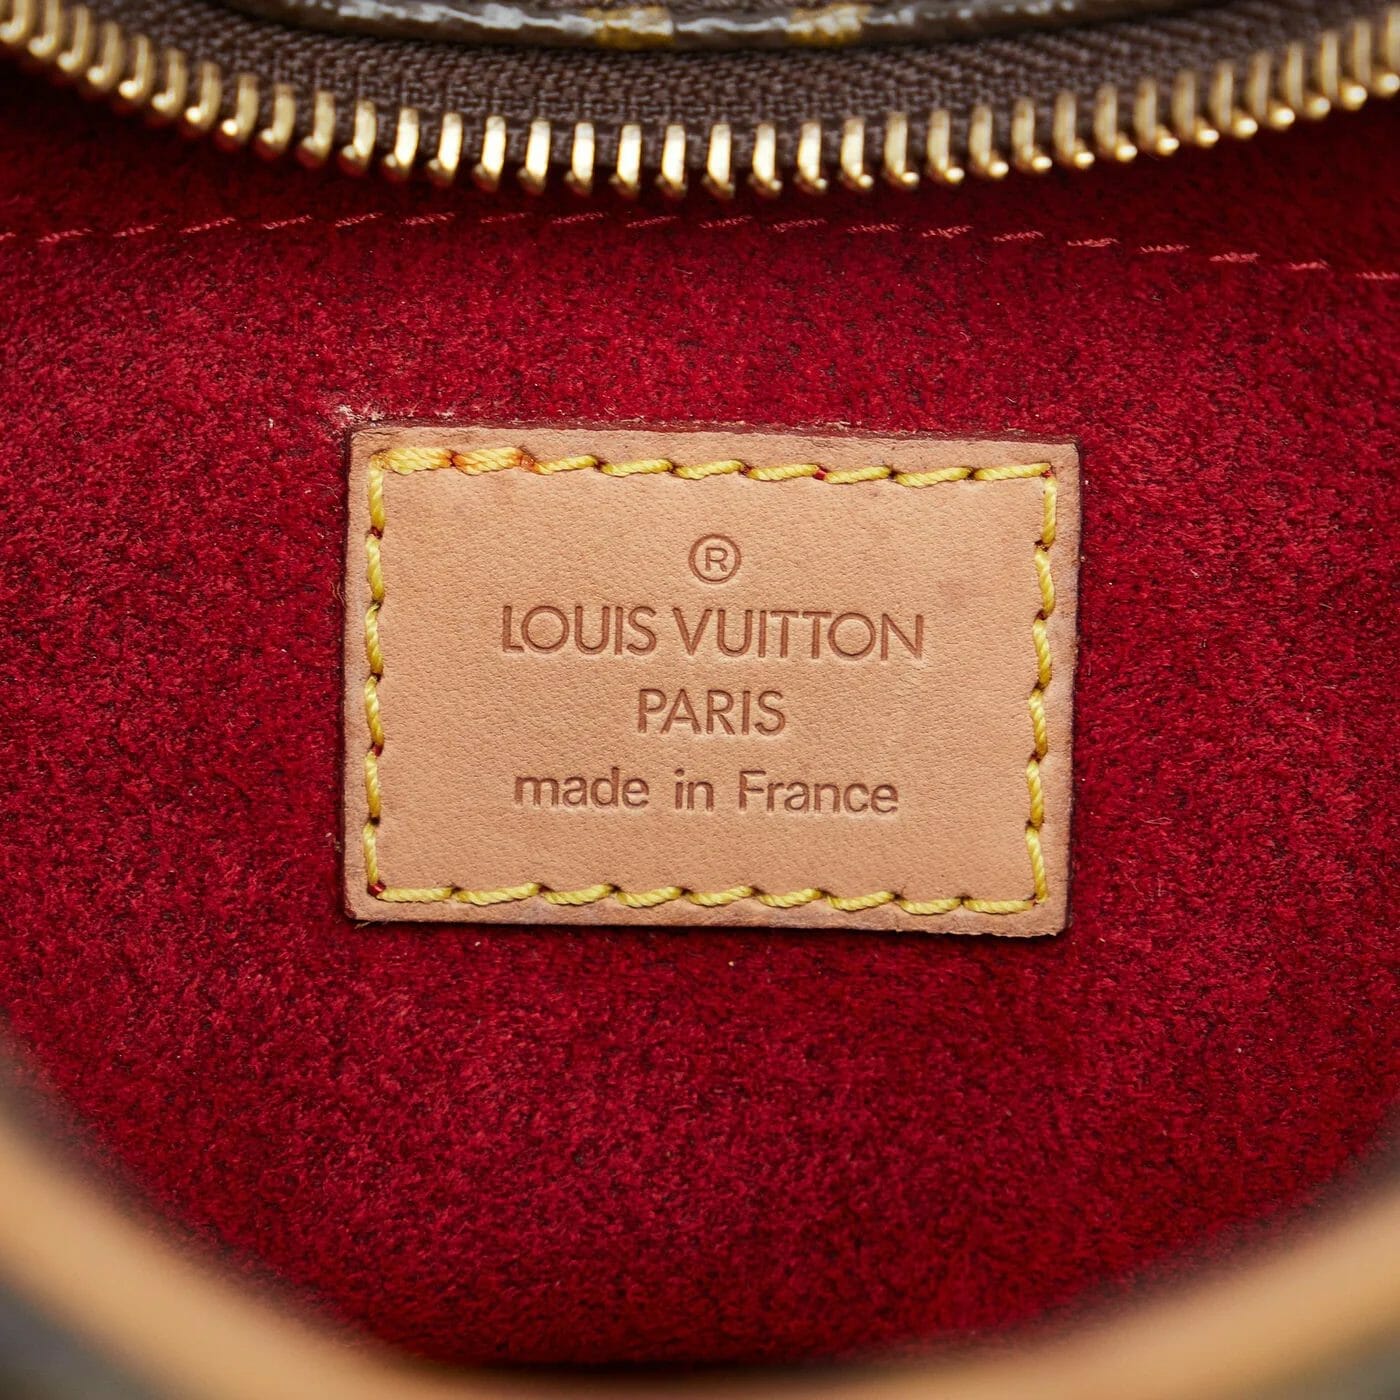 KREA - Louis Vuitton bag of weed